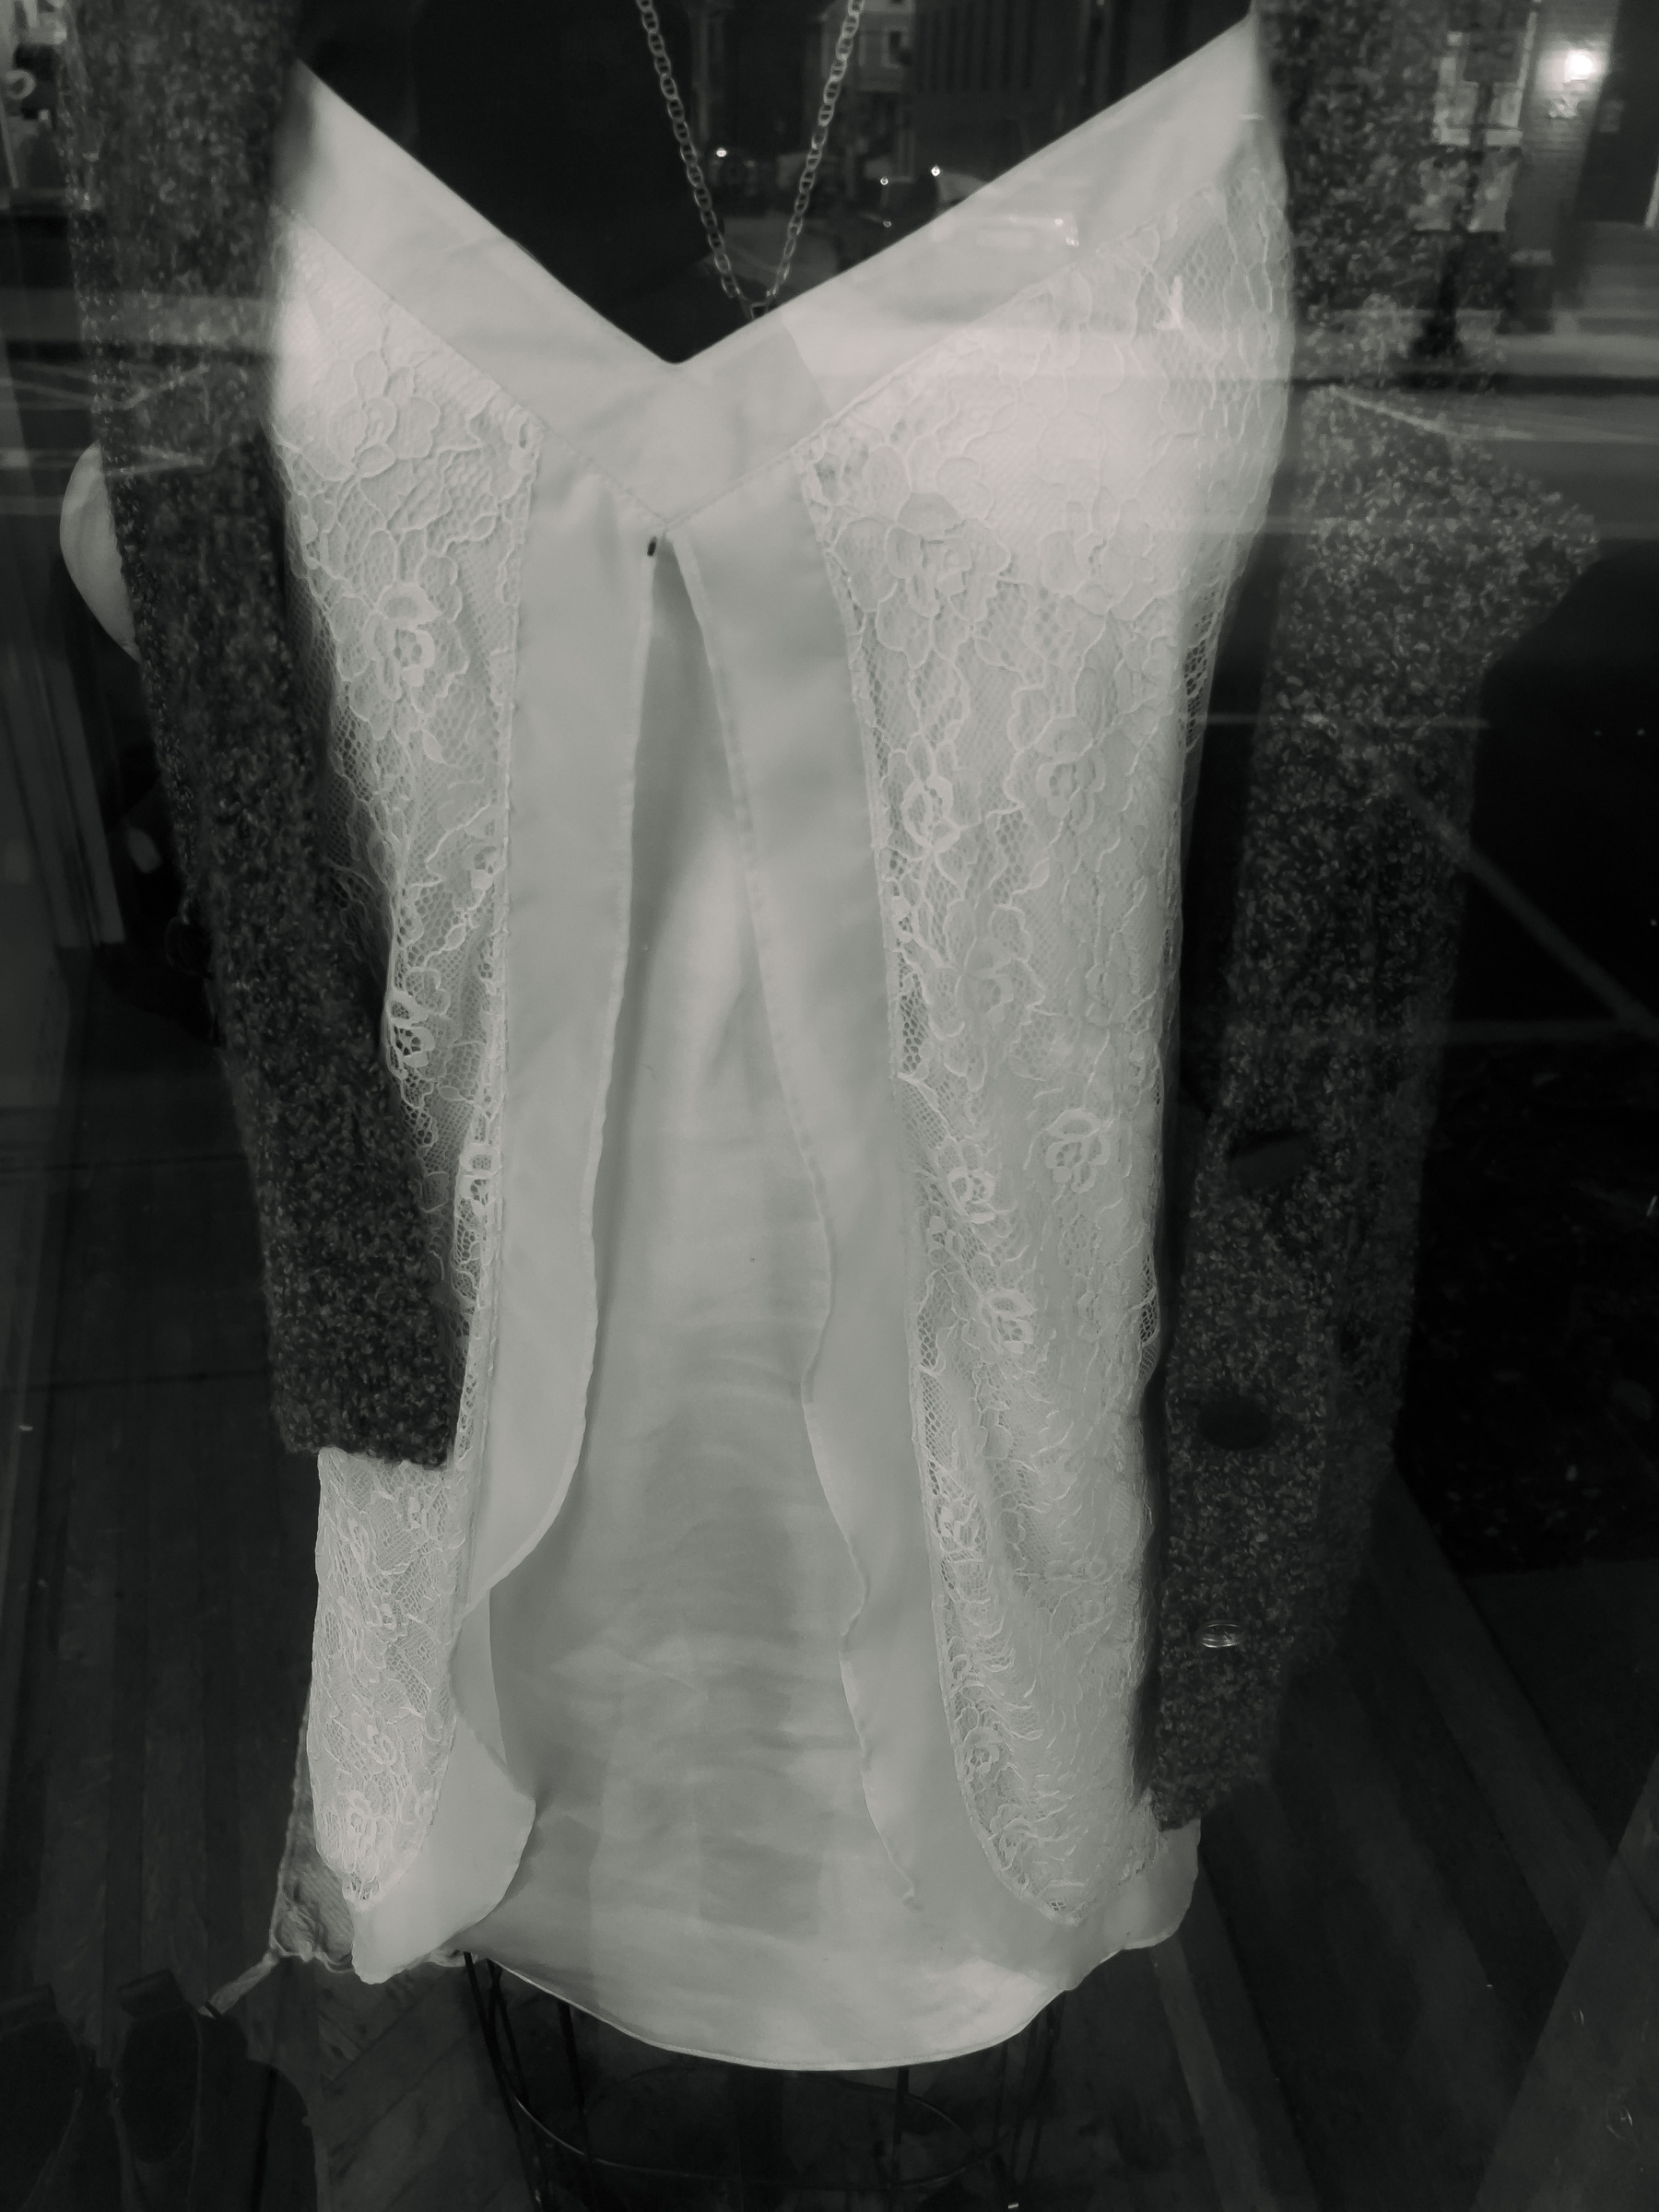 Women’s shirt dress on mannequin in shop window.